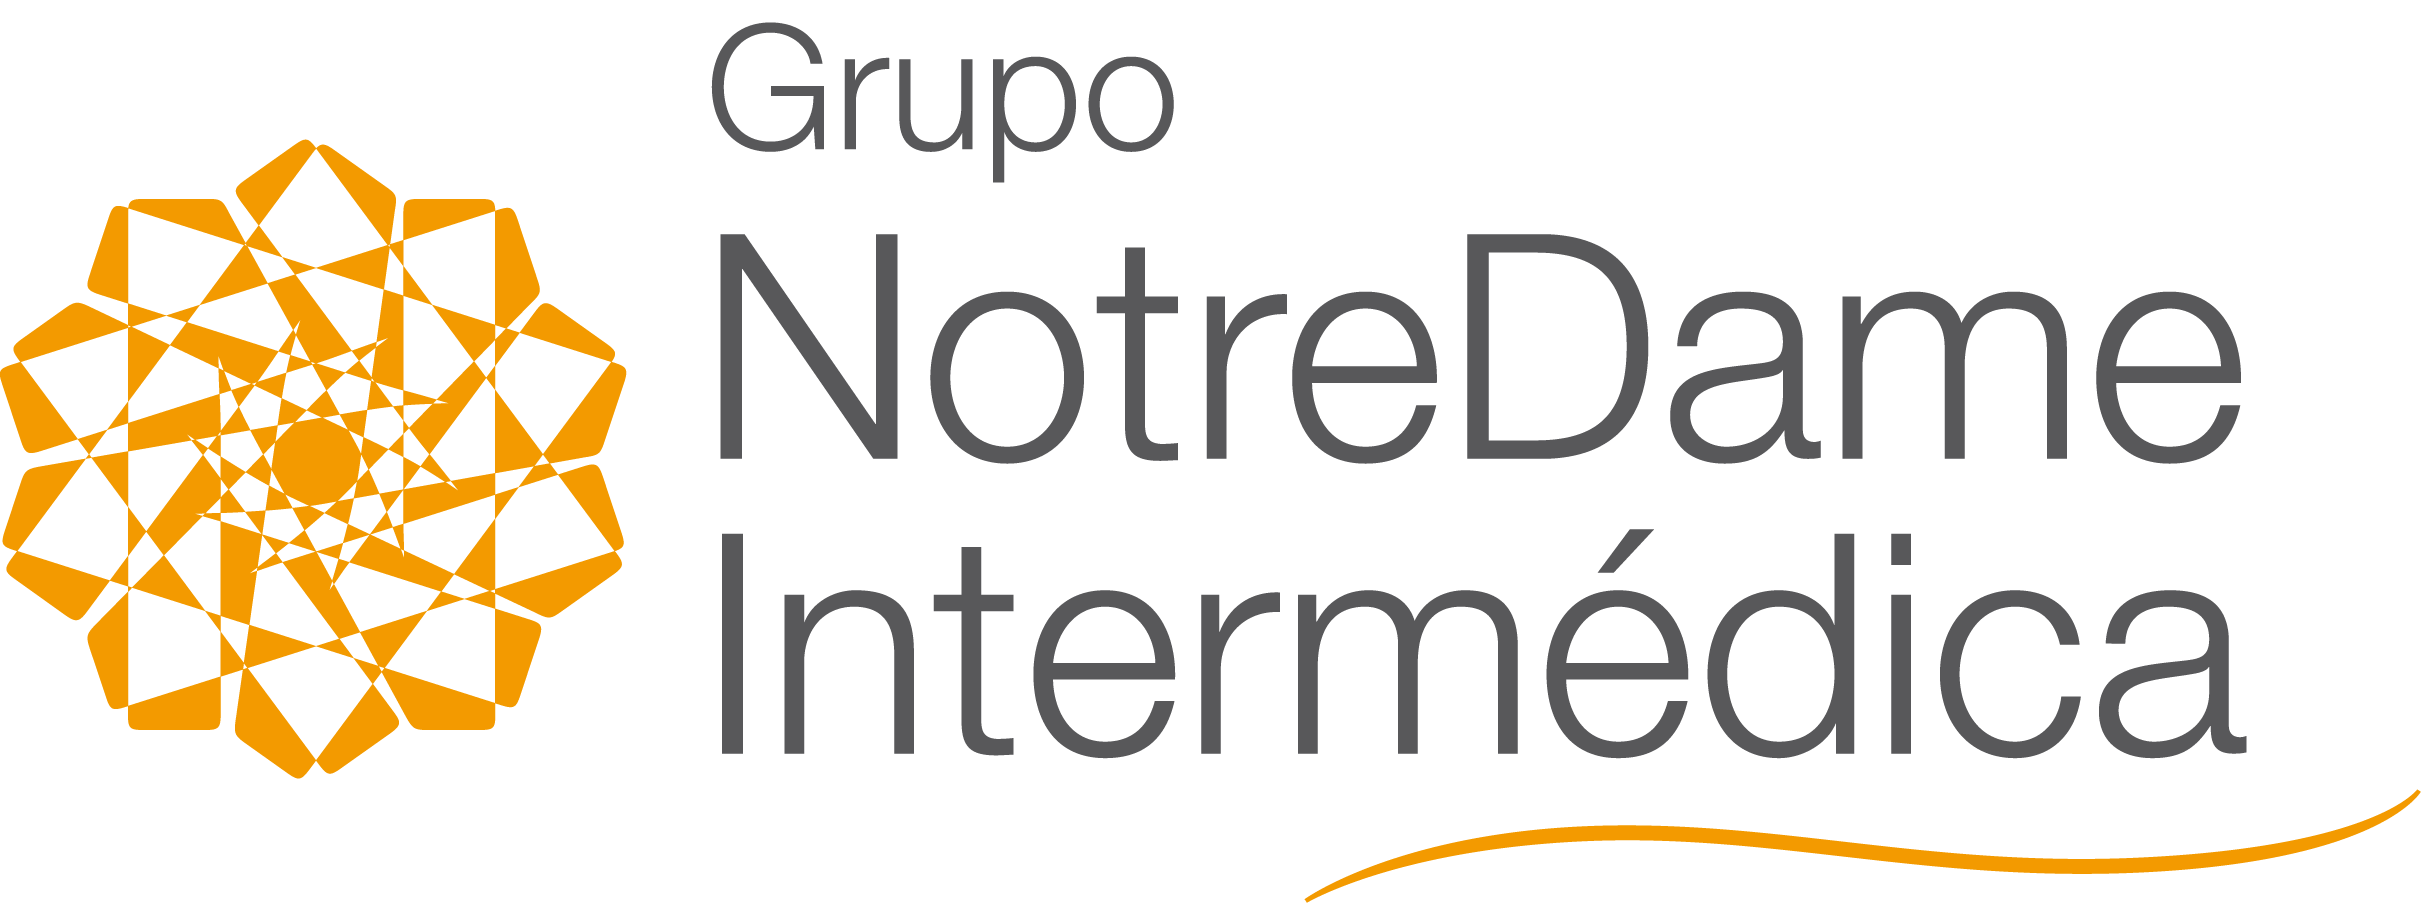 Grupo NotreDame Intermédica (GNDI) logo